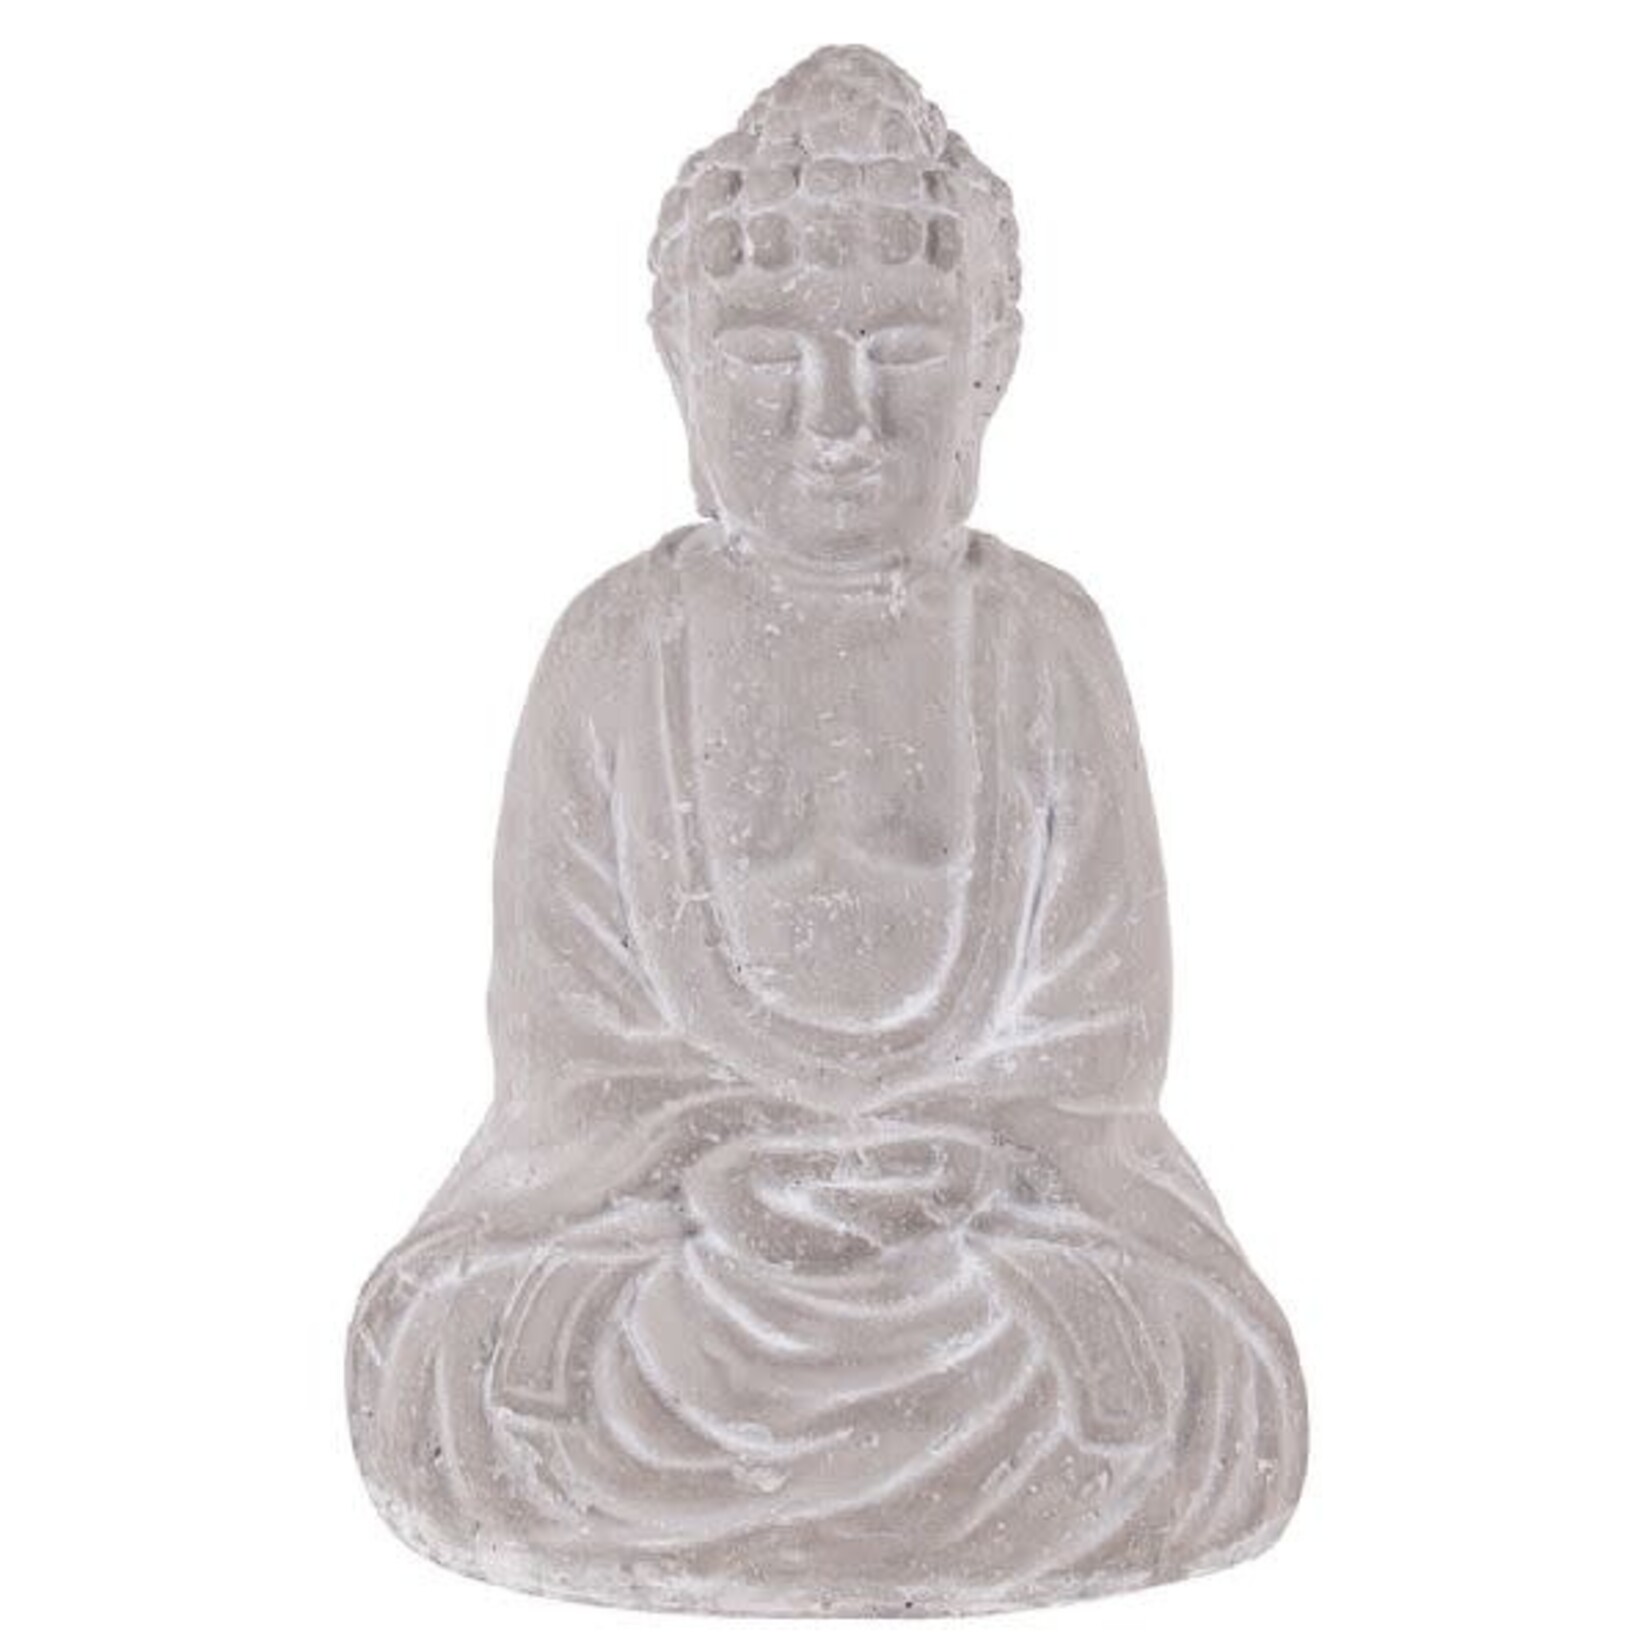 12" CEMENT SITTING BUDDAH